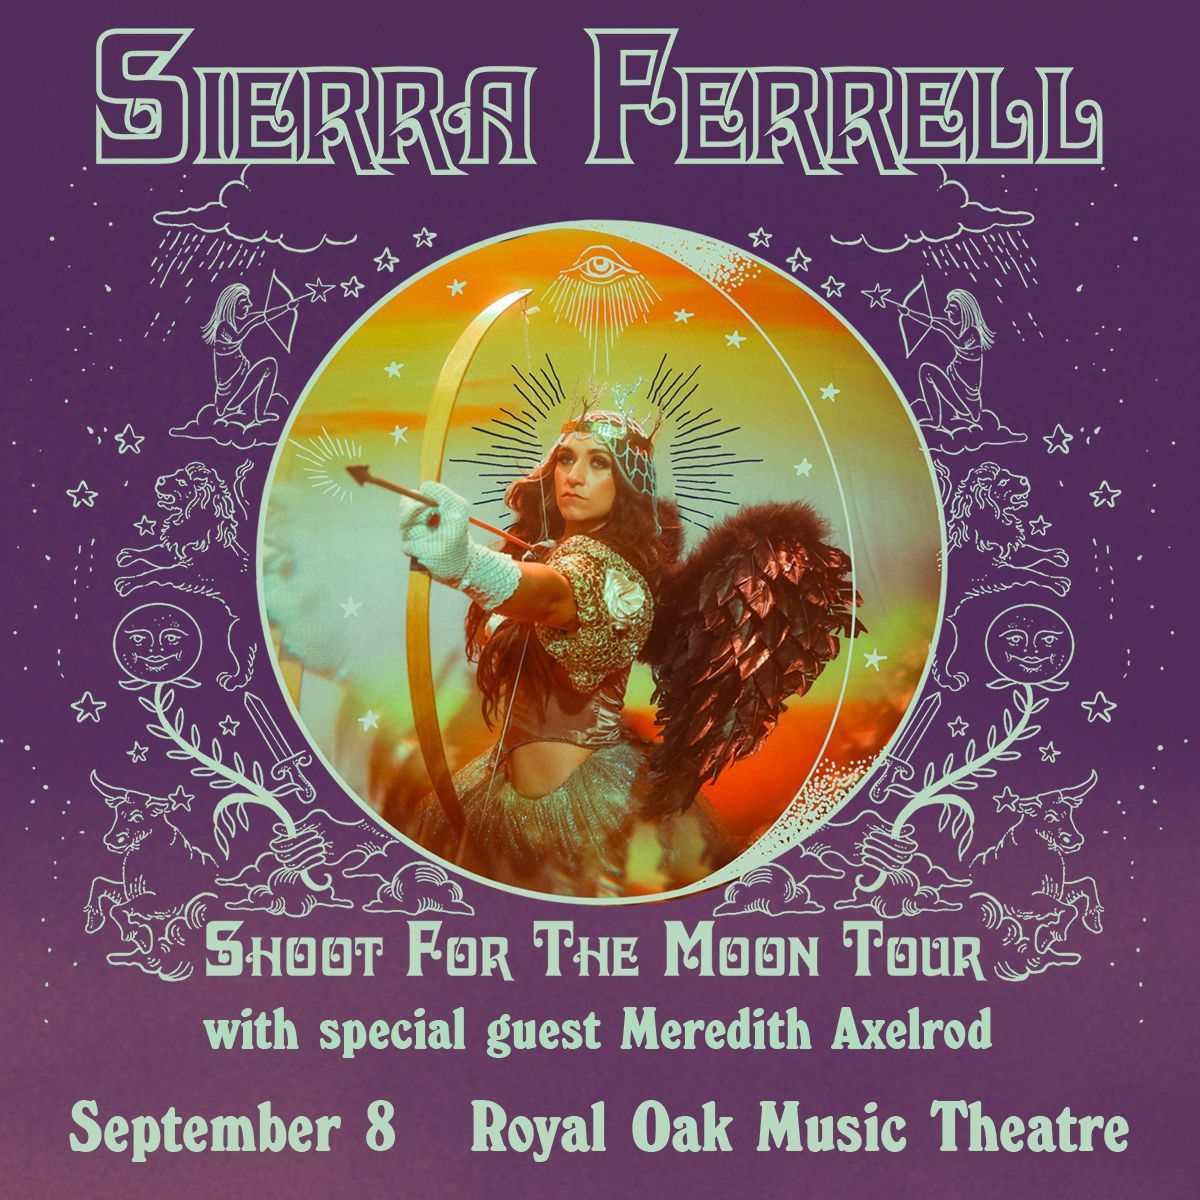 🏹 ON SALE NOW 🪐 @SierraFerrell | 🗓 September 8 🎫: buff.ly/3W6odZl